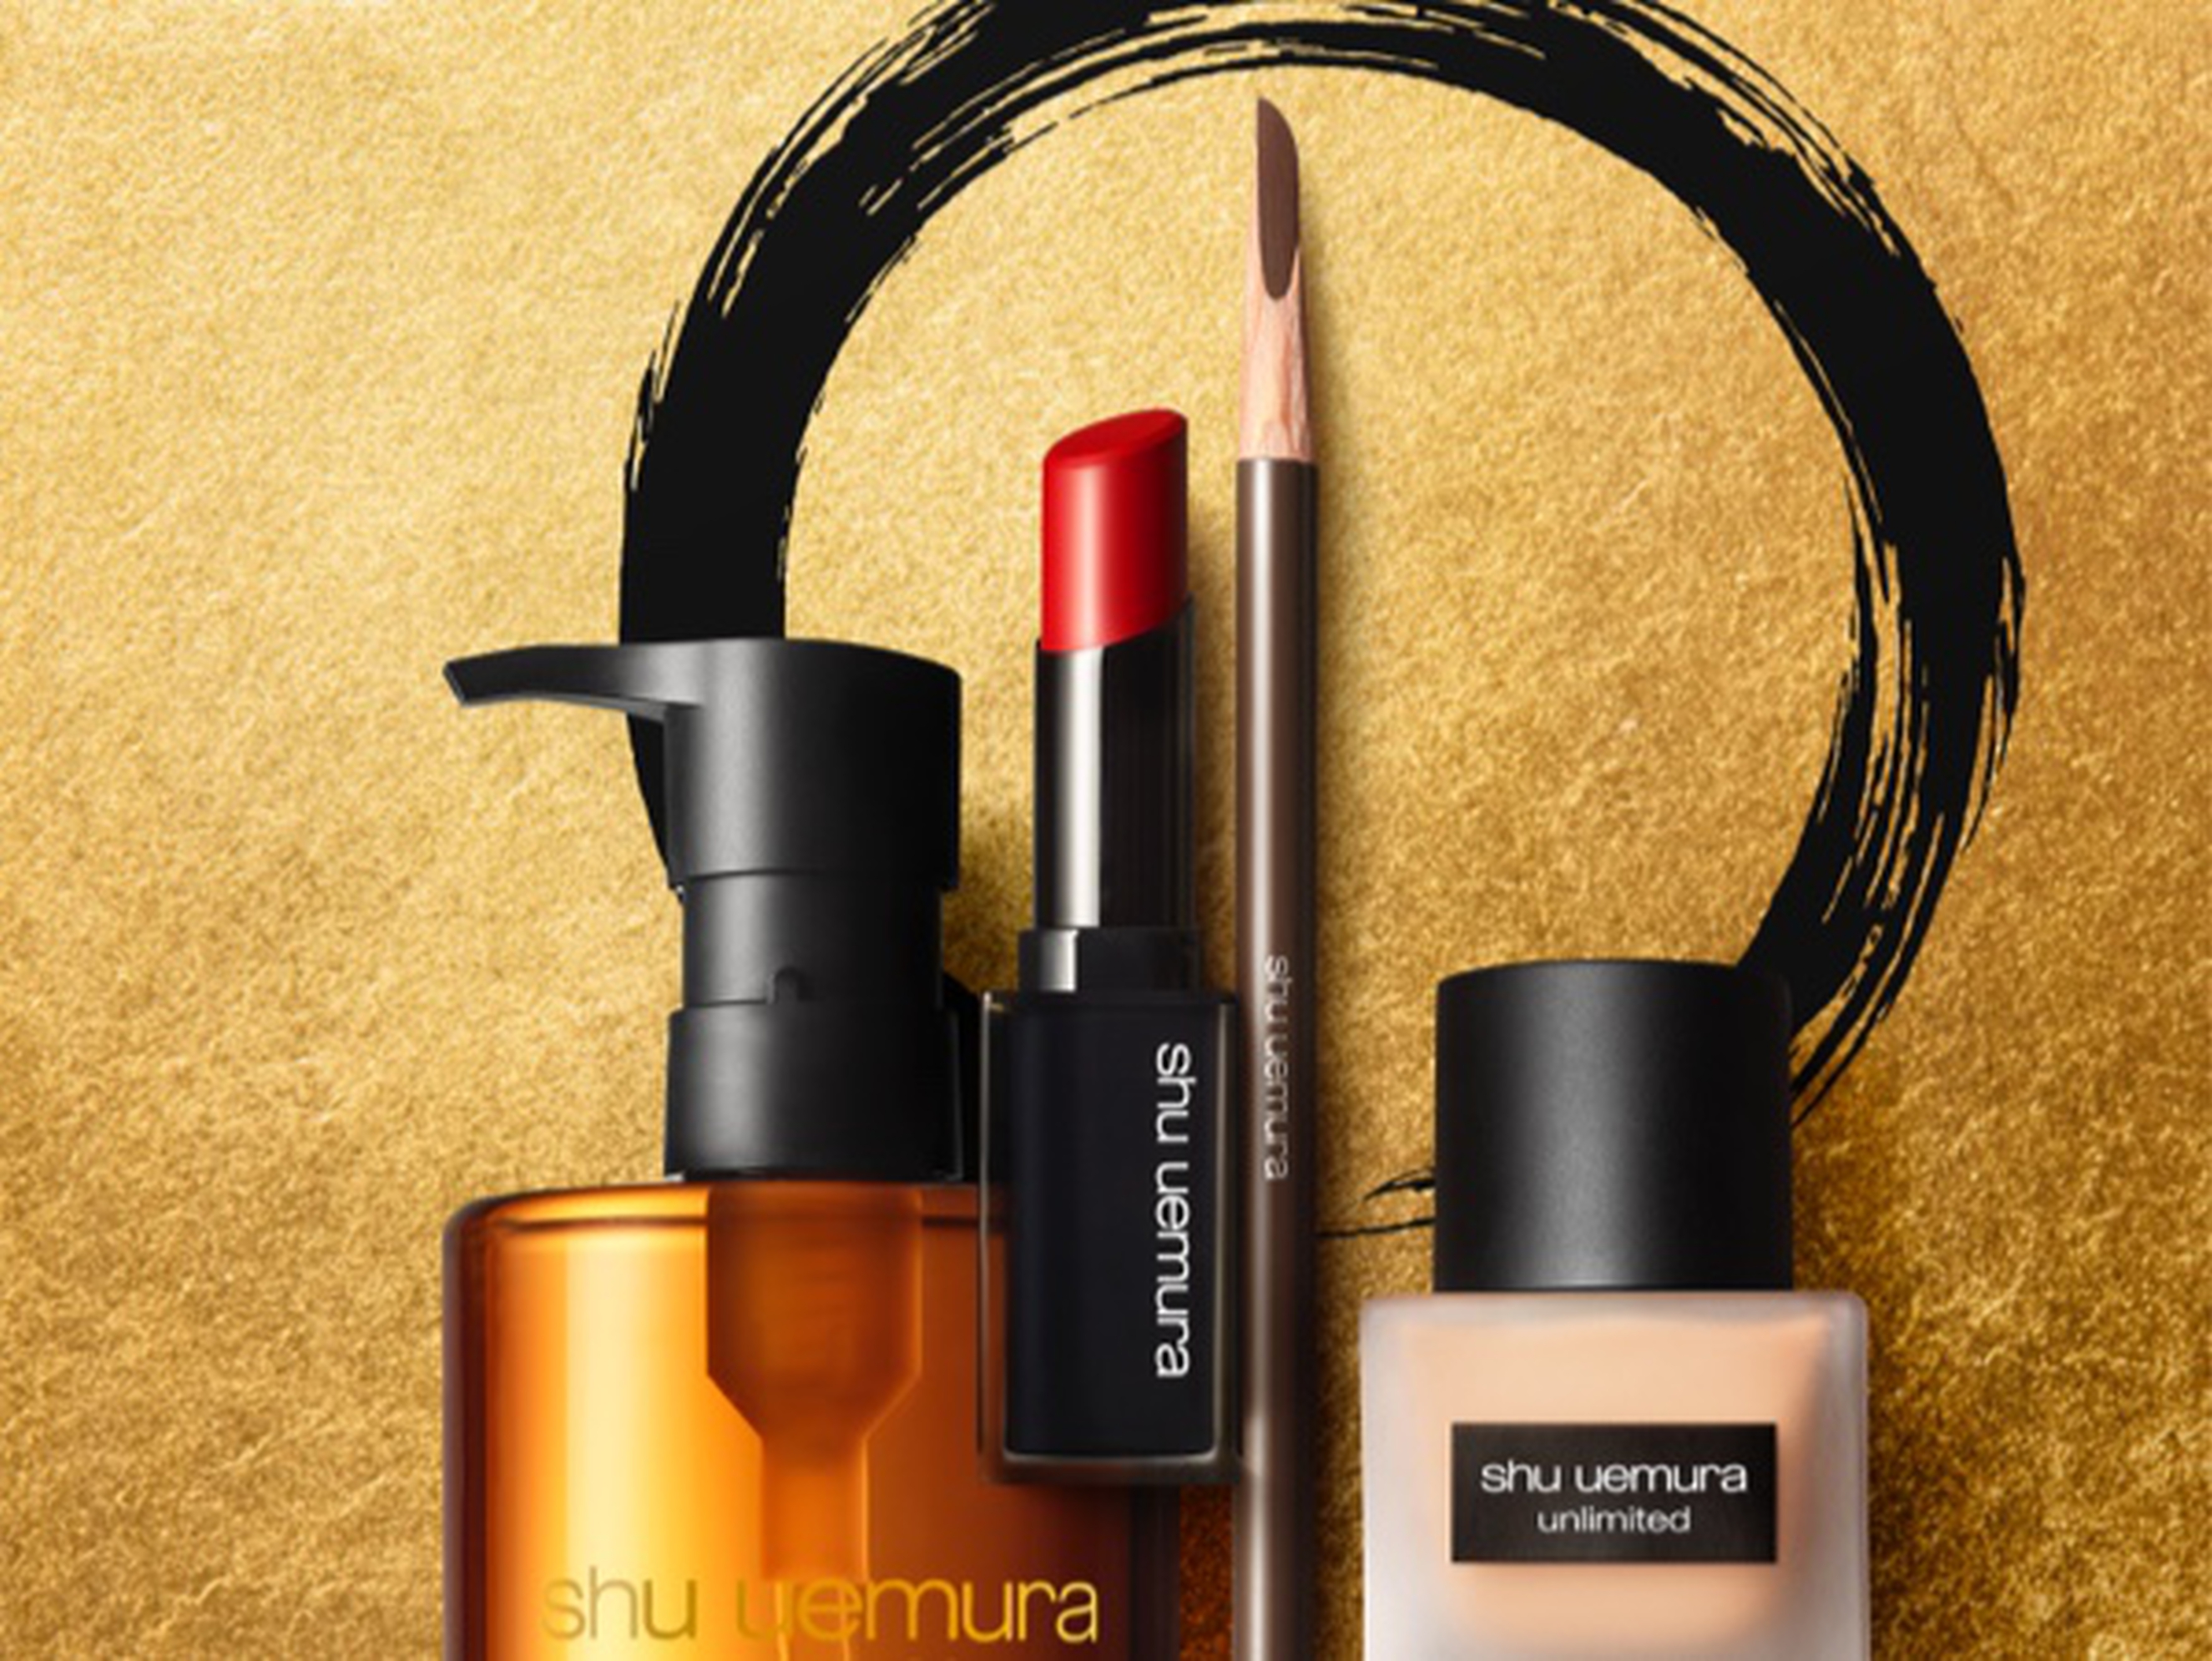 Shu Uemura Art of Beauty CA - Iconic Makeup, Skincare